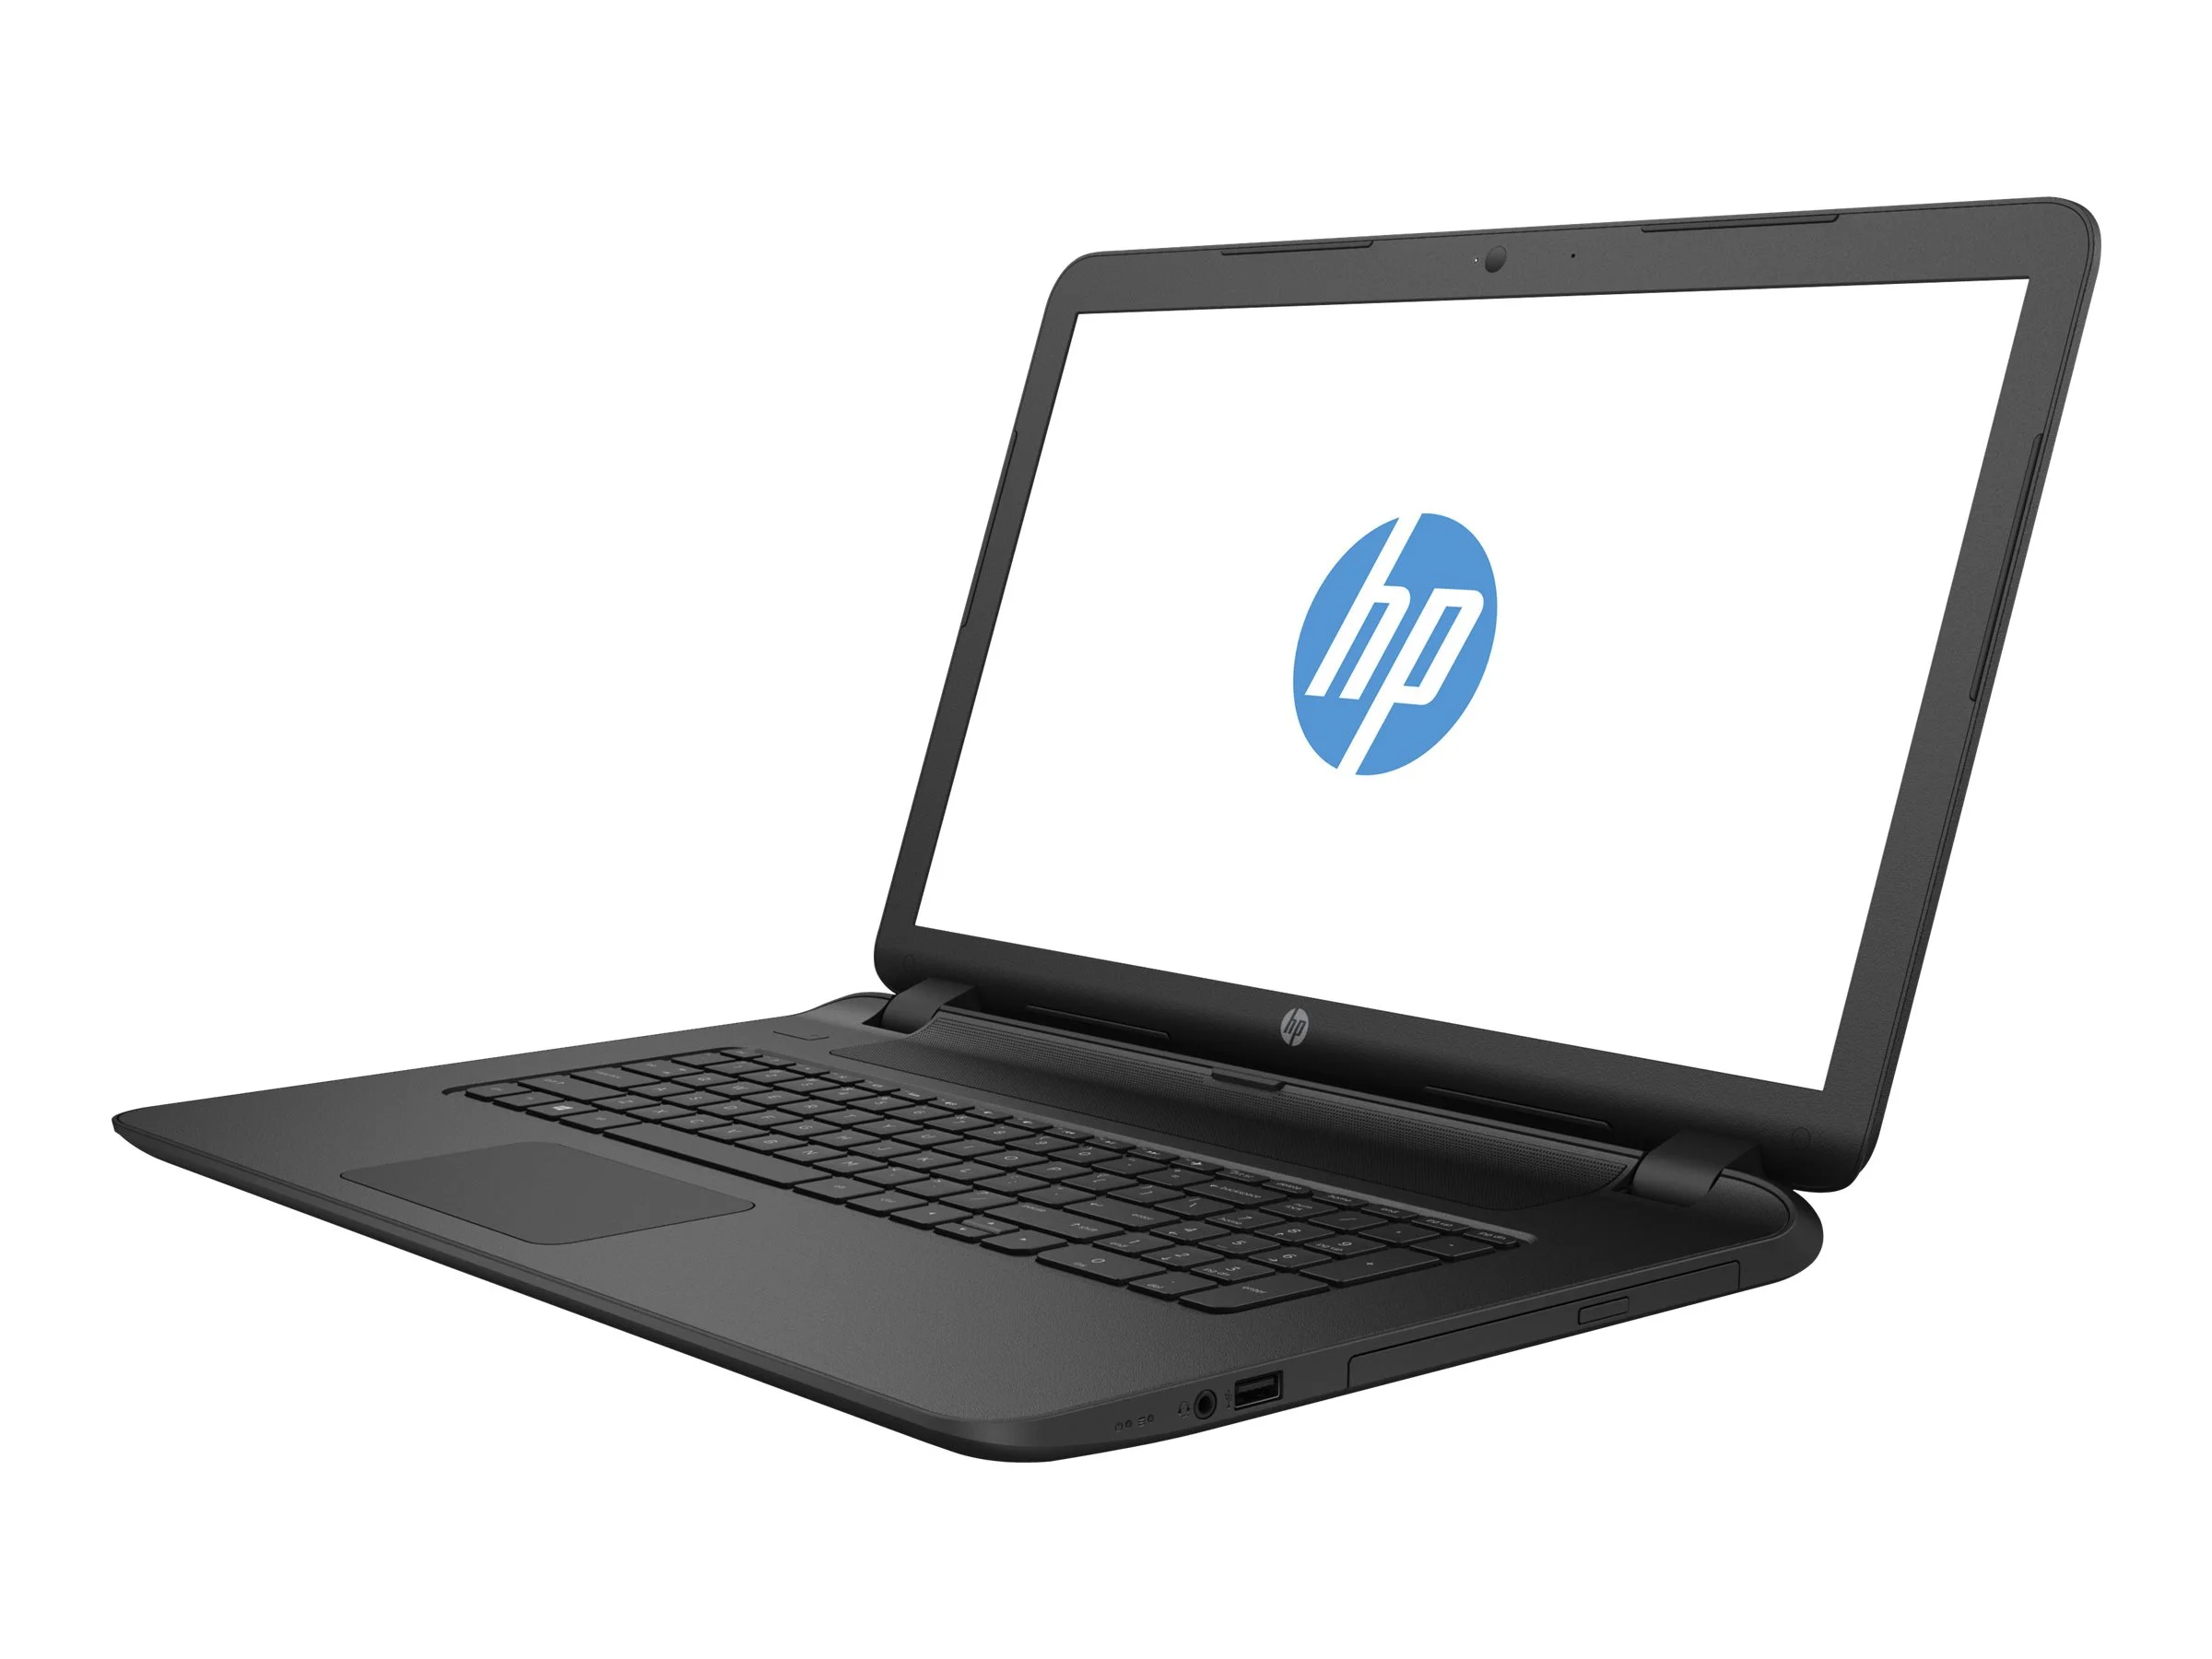 HP Laptop 17-p121wm - AMD A6 6310 / 1.8 GHz - Win 10 Home 64-bit - Radeon R4 - 4 GB RAM - 500 GB HDD - DVD SuperMulti - 17.3" 1600 x 900 (HD+) - HP textured linear pattern in black - kbd: US